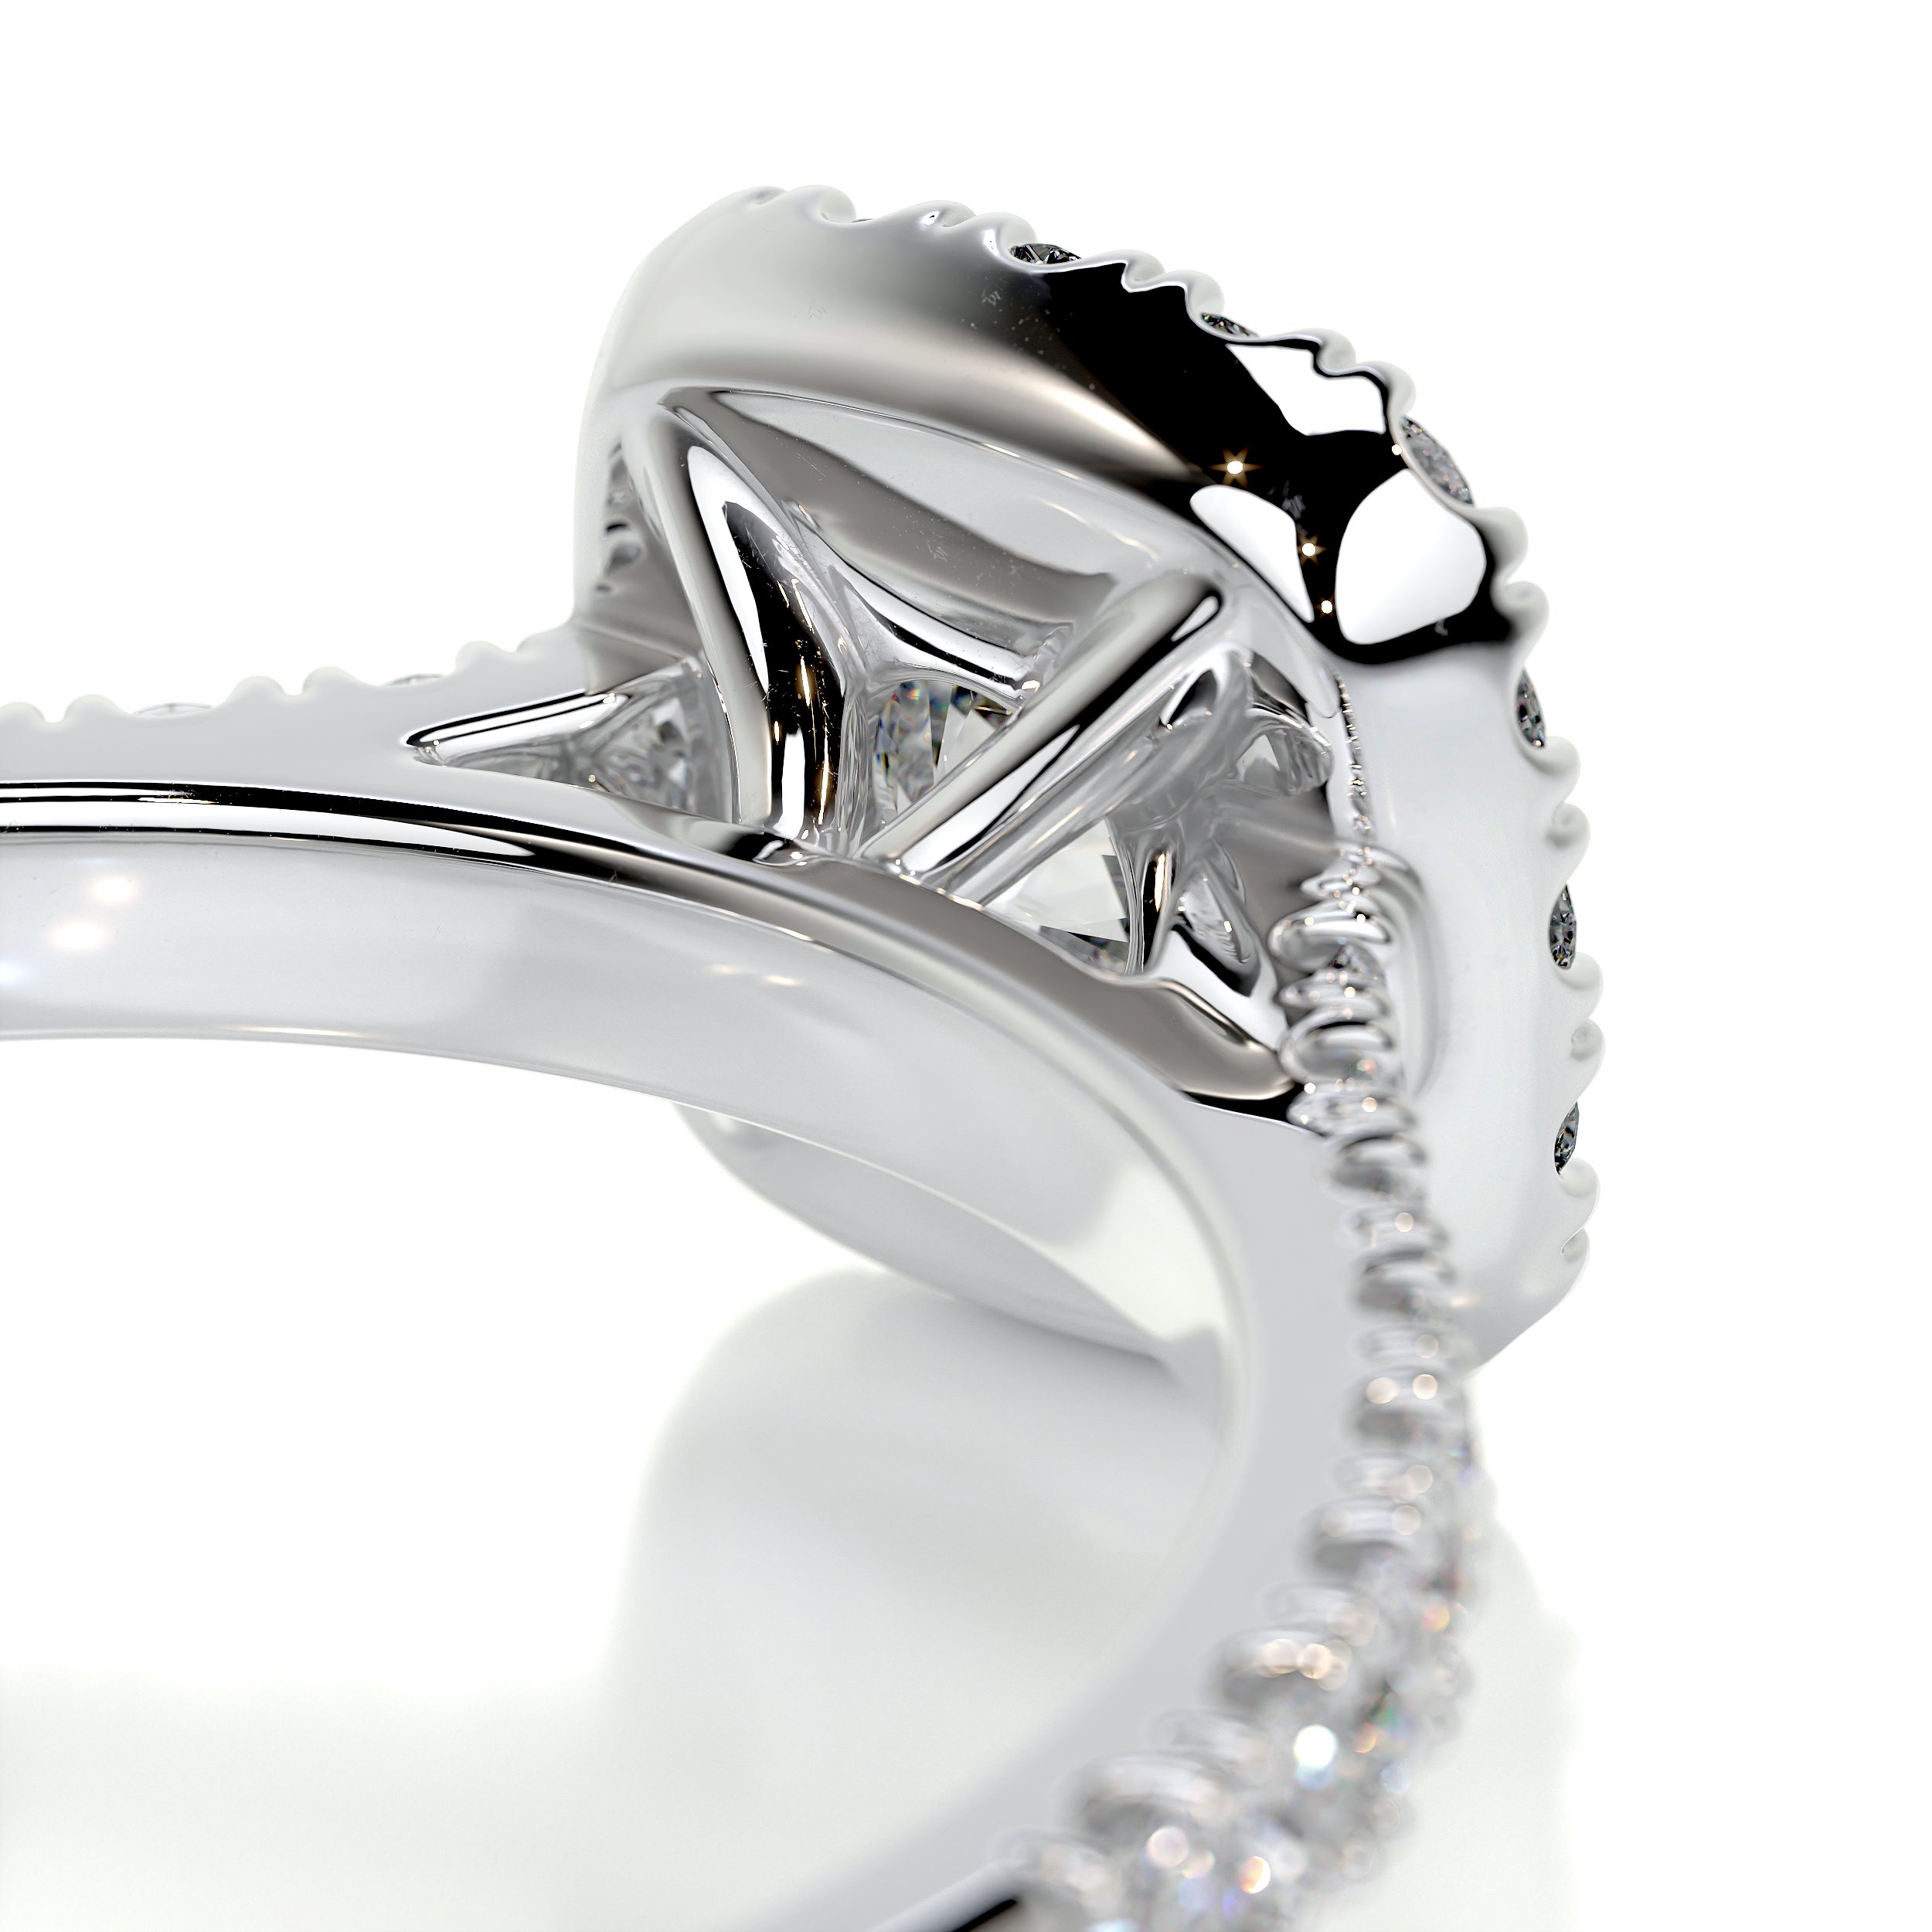 Claudia Diamond Engagement Ring -18K White Gold